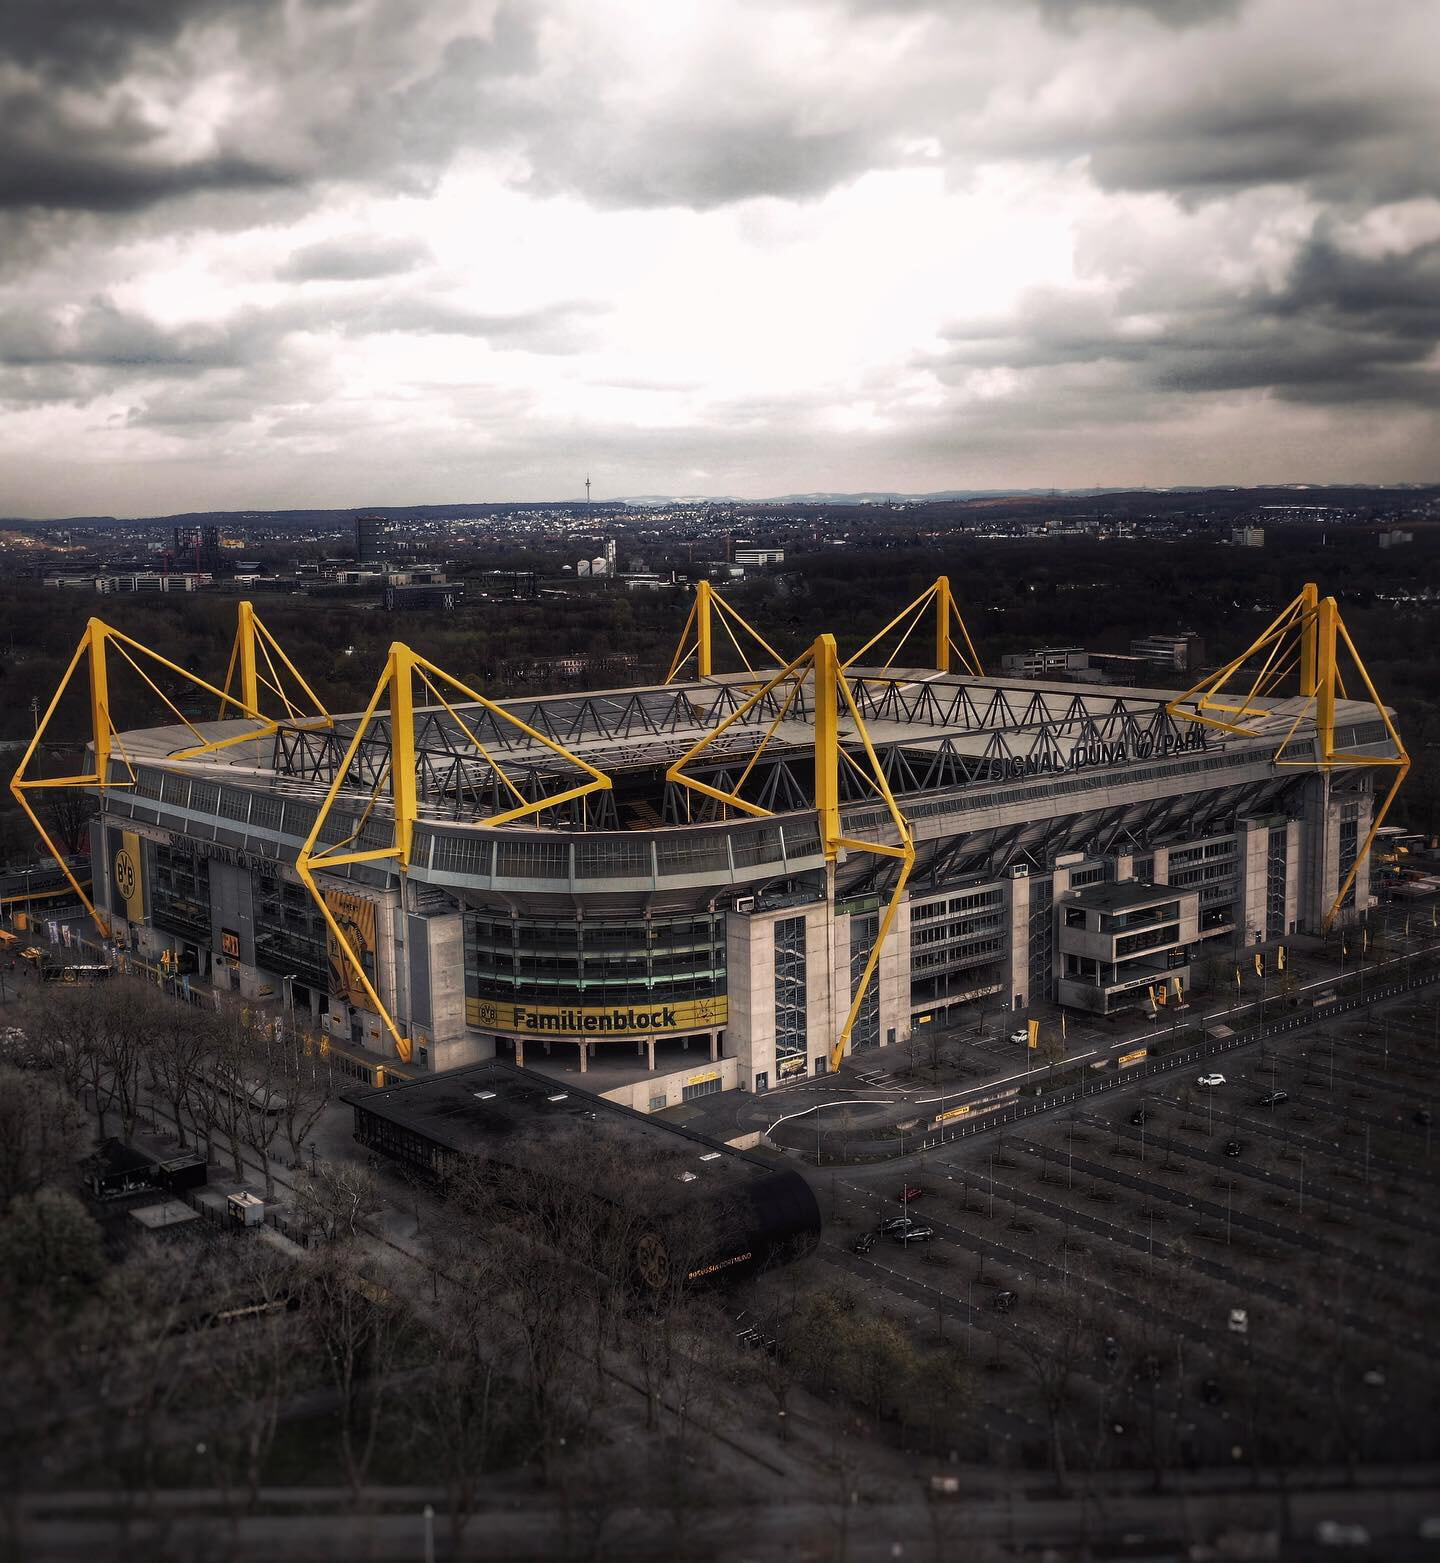 Dortmundas